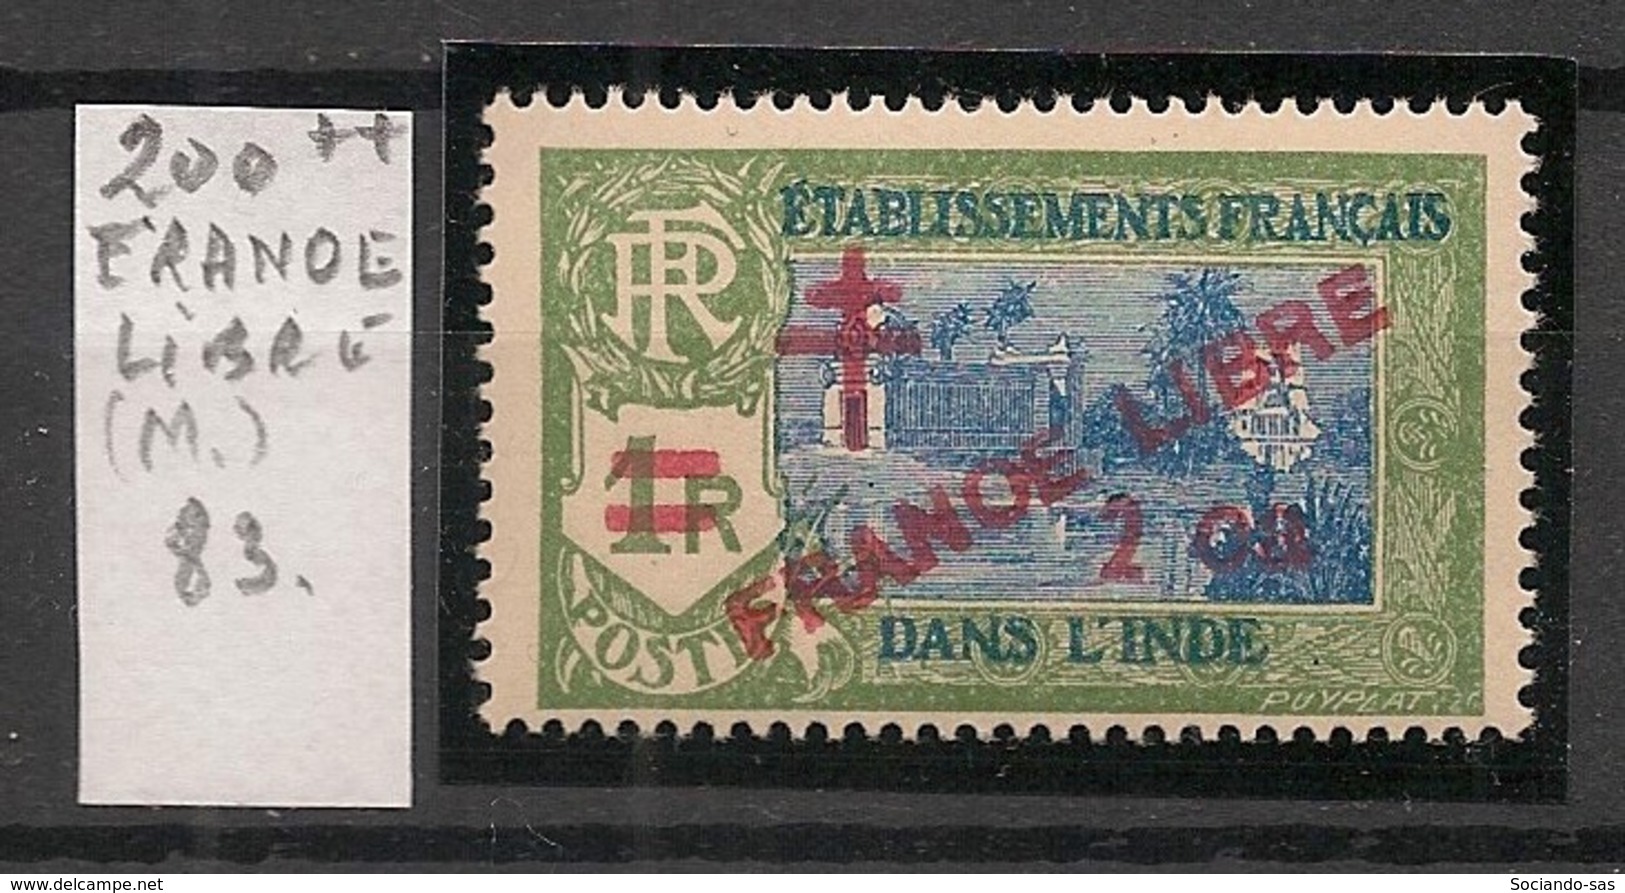 Inde - 1943 - N°Yv. 200 - Variété FRANOE Libre - Neuf Luxe ** / MNH / Postfrisch - Nuevos